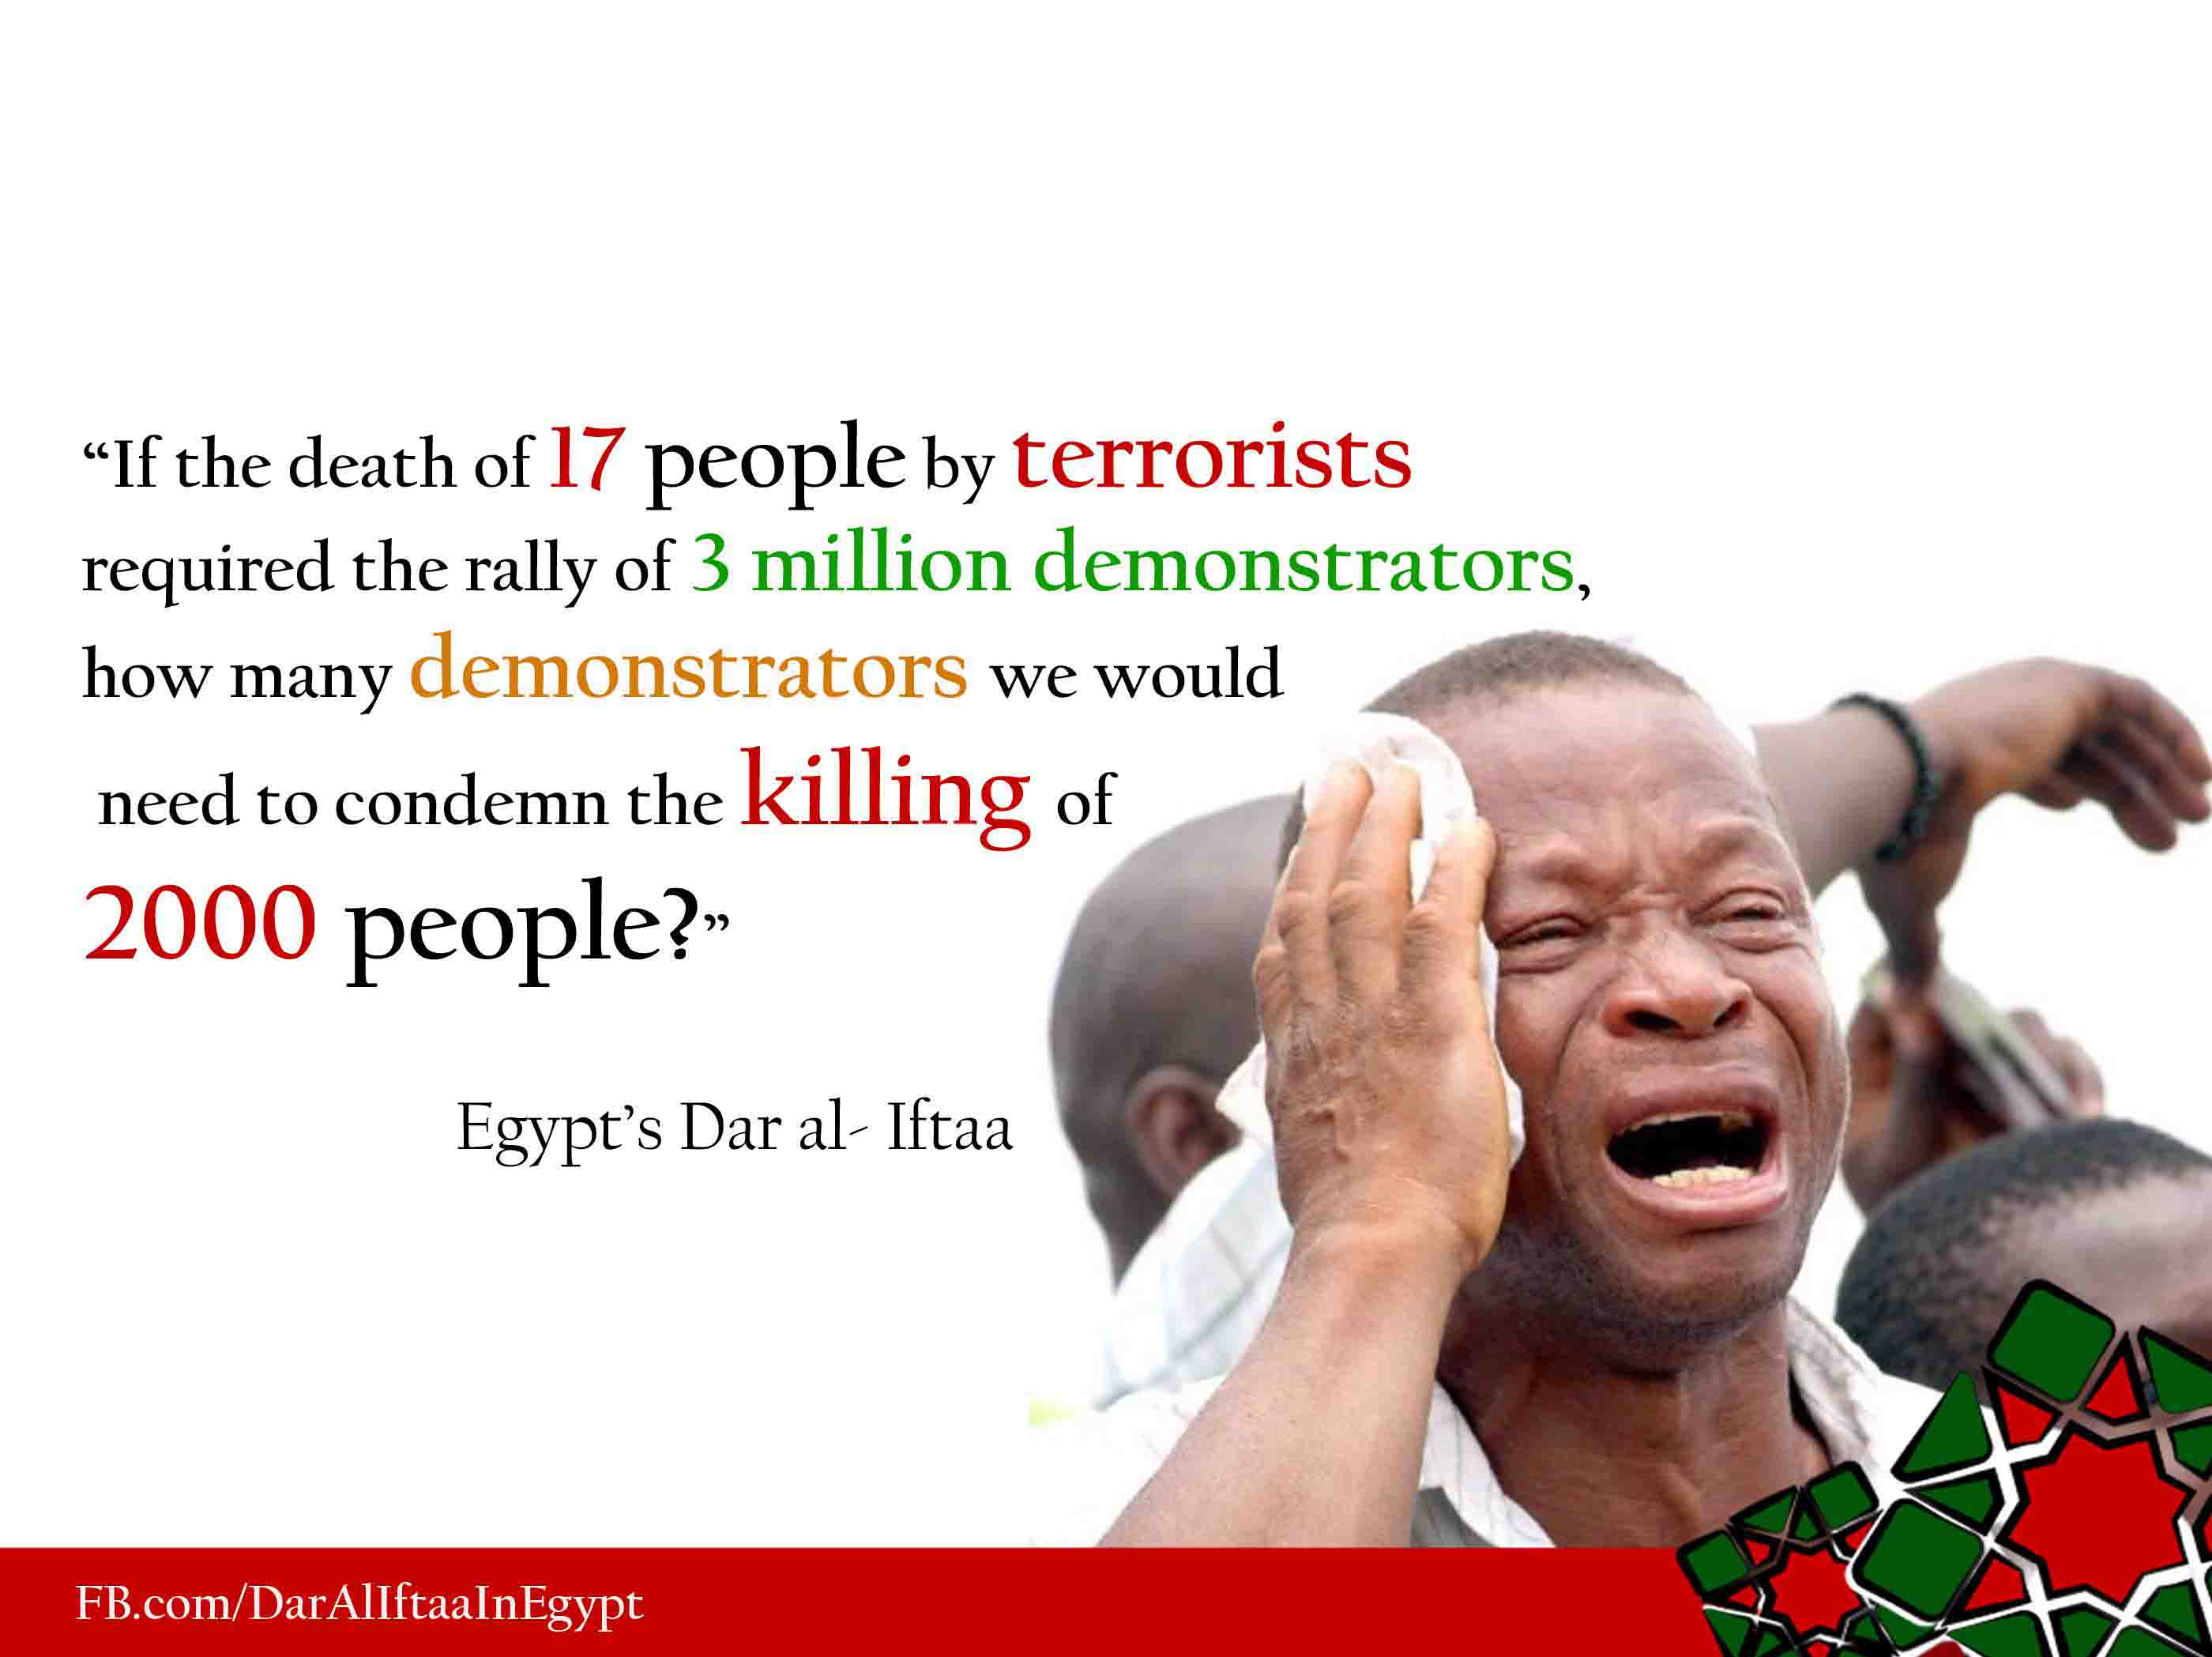  Dar al- Iftaa vehemently condemns the heinous massacre of 2000 people in Nigeria by Boko Haram terrorist group